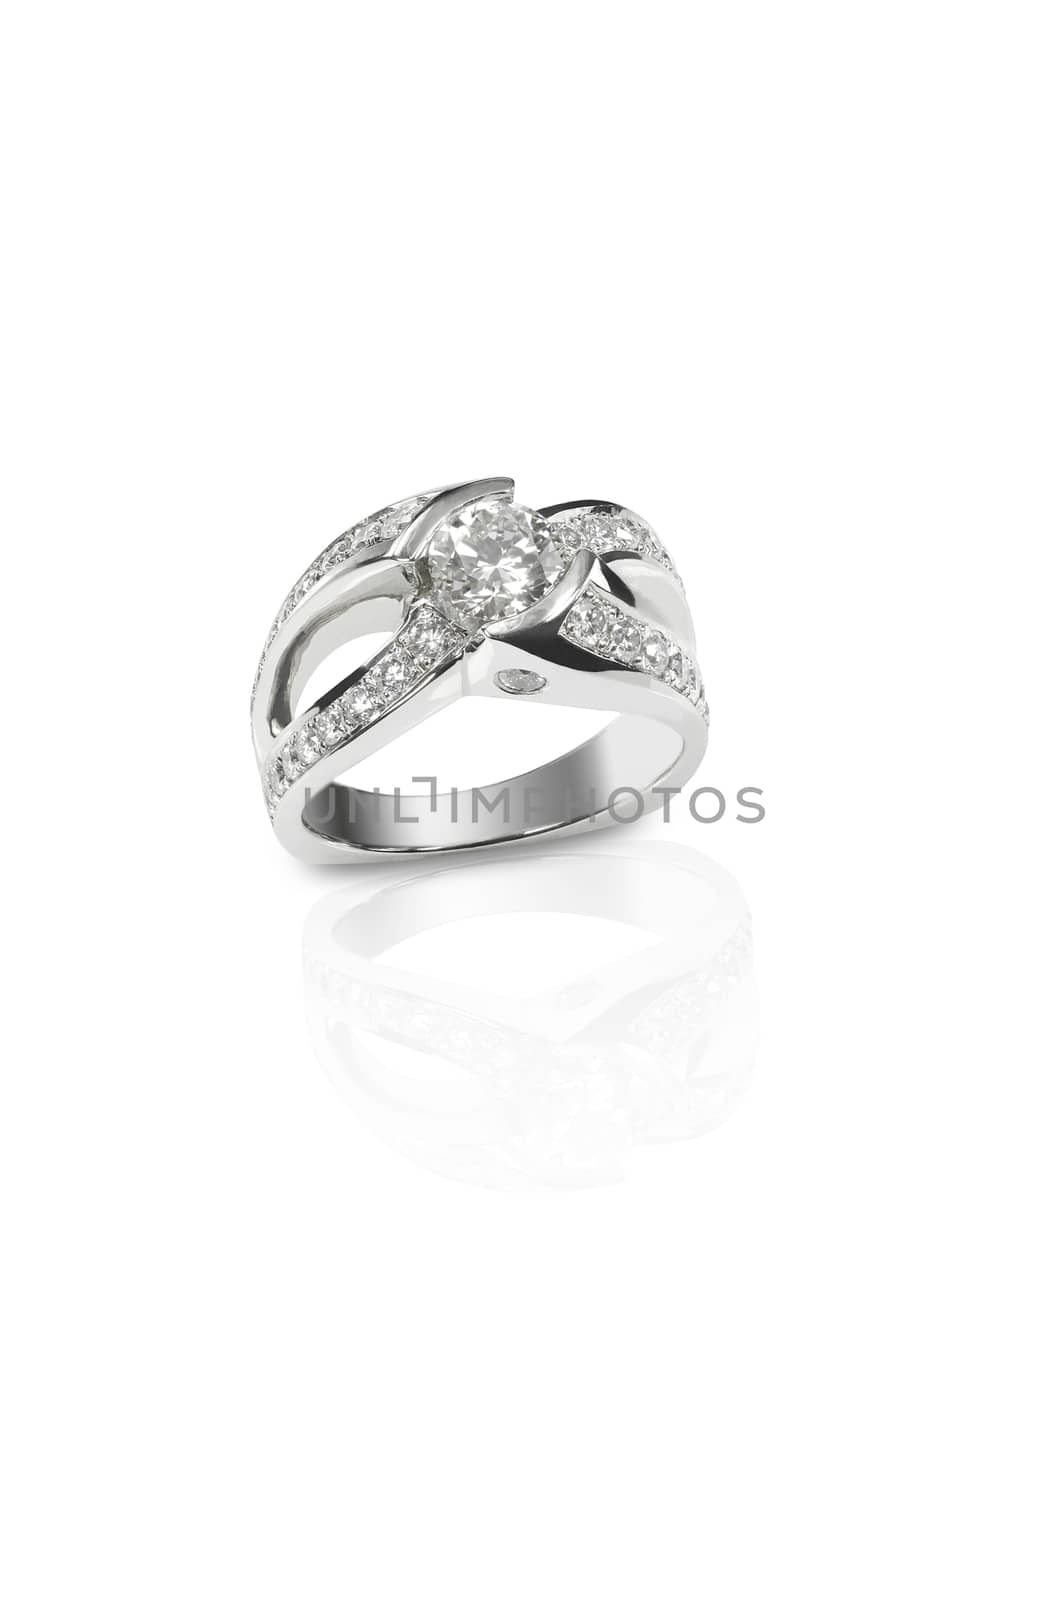 Diamond encrusted engagment wedding anniversary ring by fruitcocktail